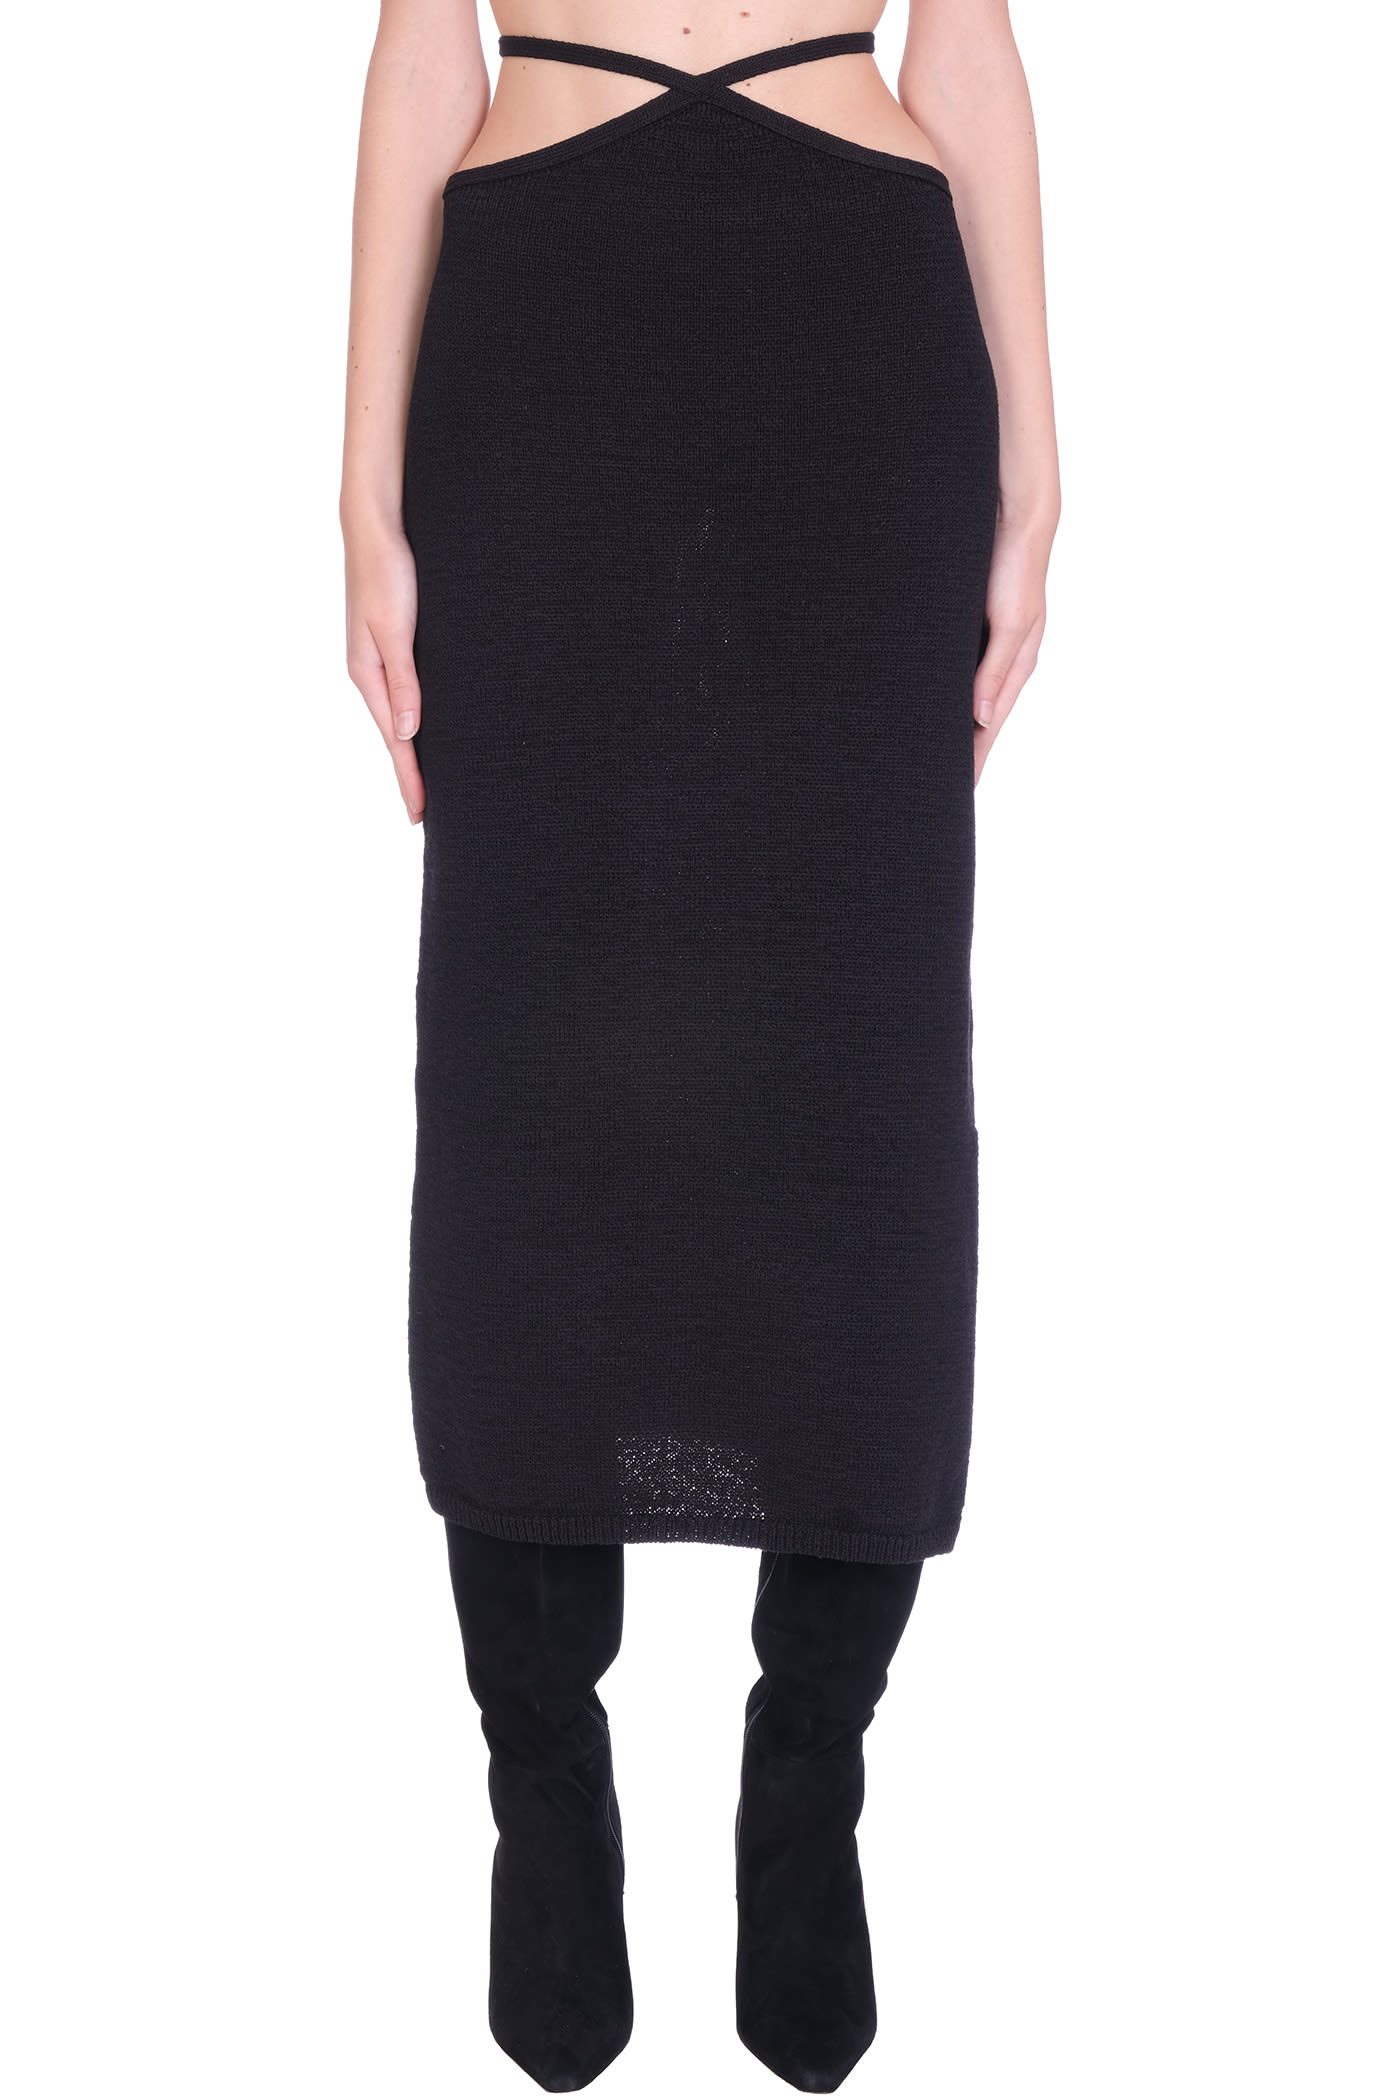 Cult Gaia Hedda Skirt In Black Cotton